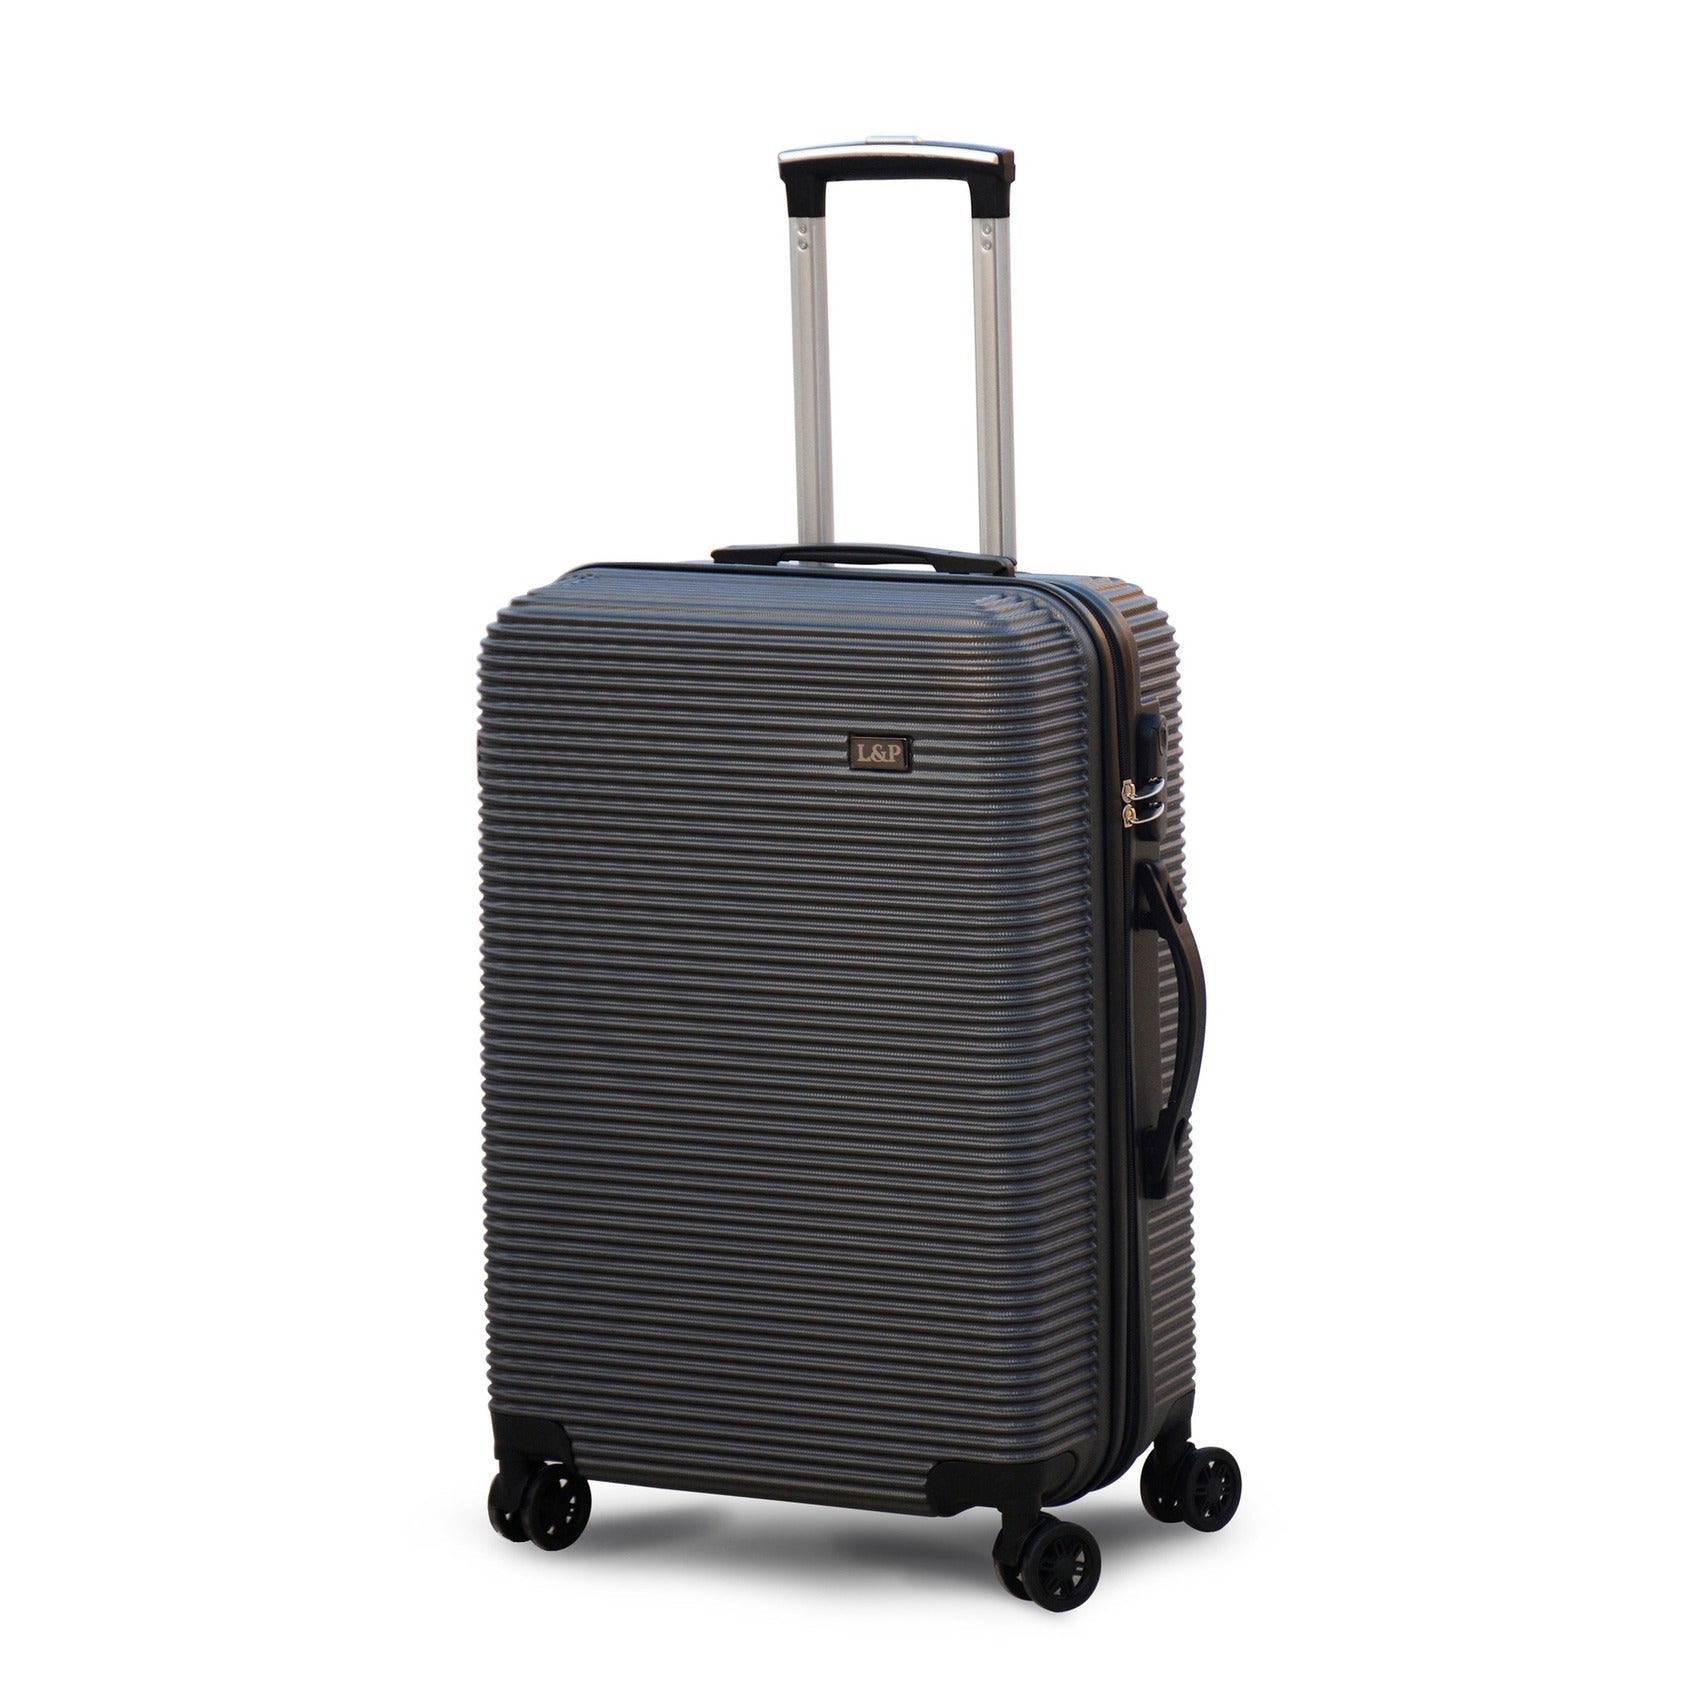 28" Dark Grey Colour JIAN ABS Line Luggage Lightweight Hard Case Trolley Bag with Spinner Wheel